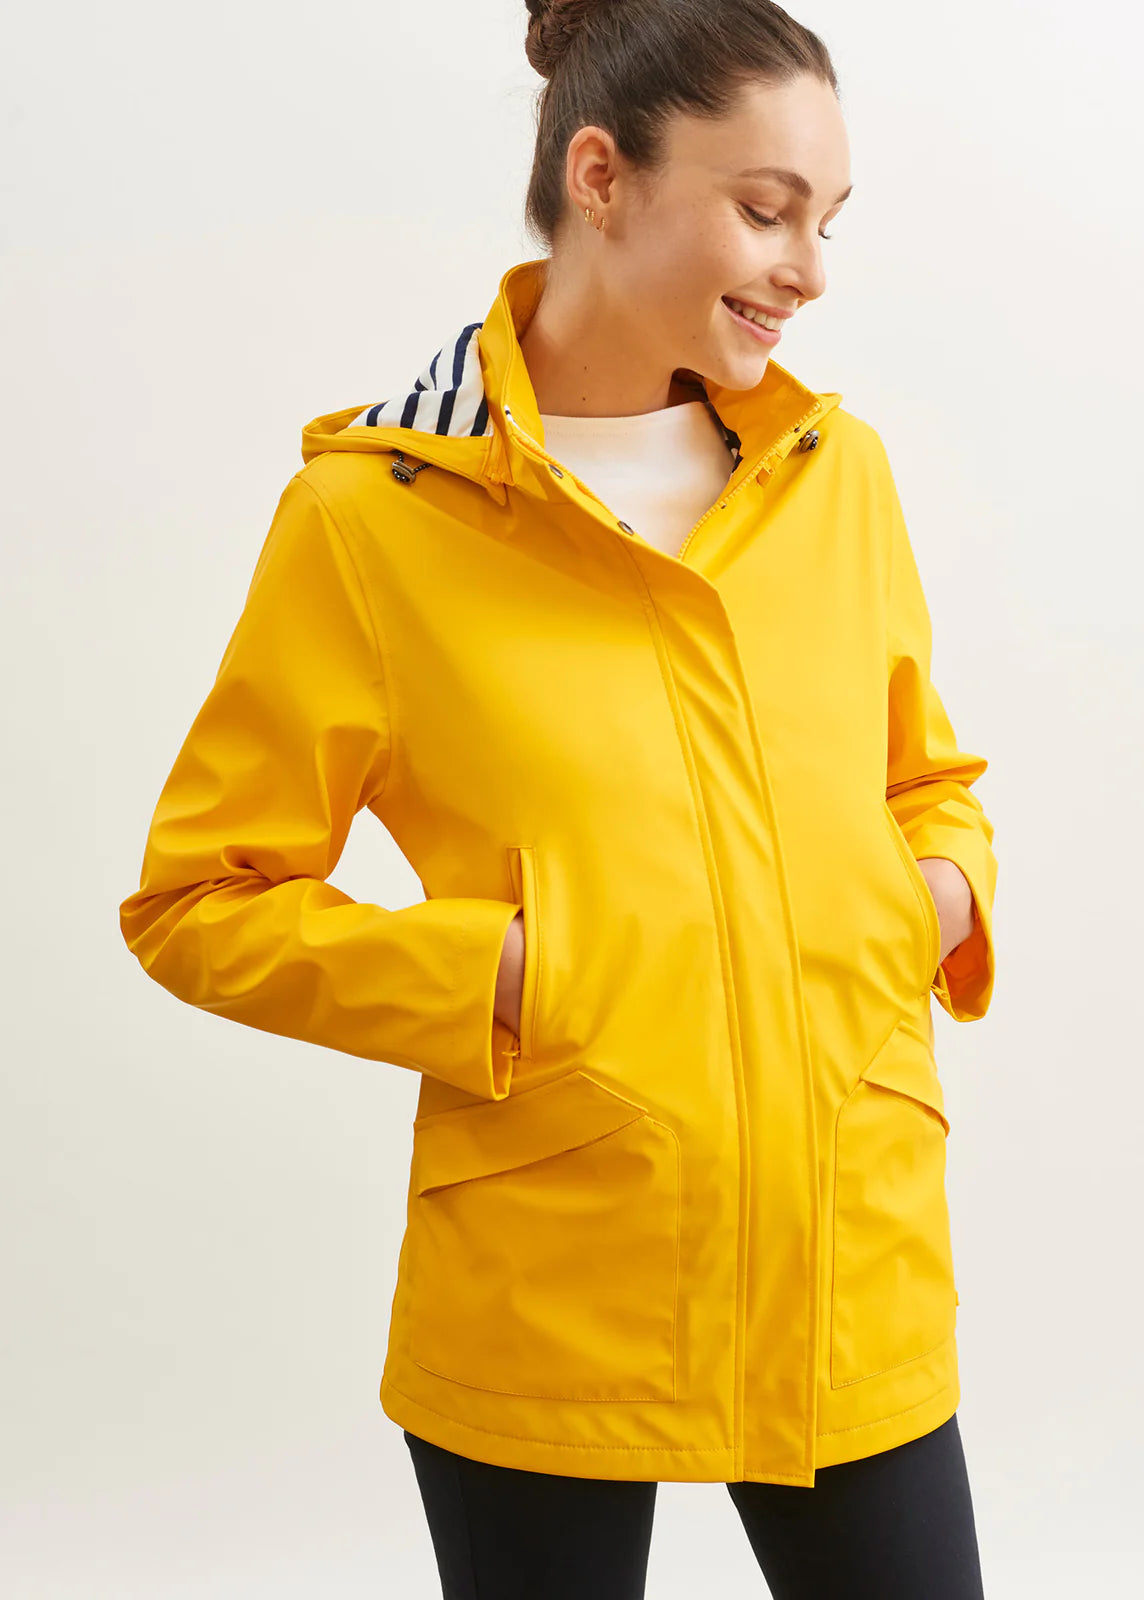 Stearns rain jacket - Gem